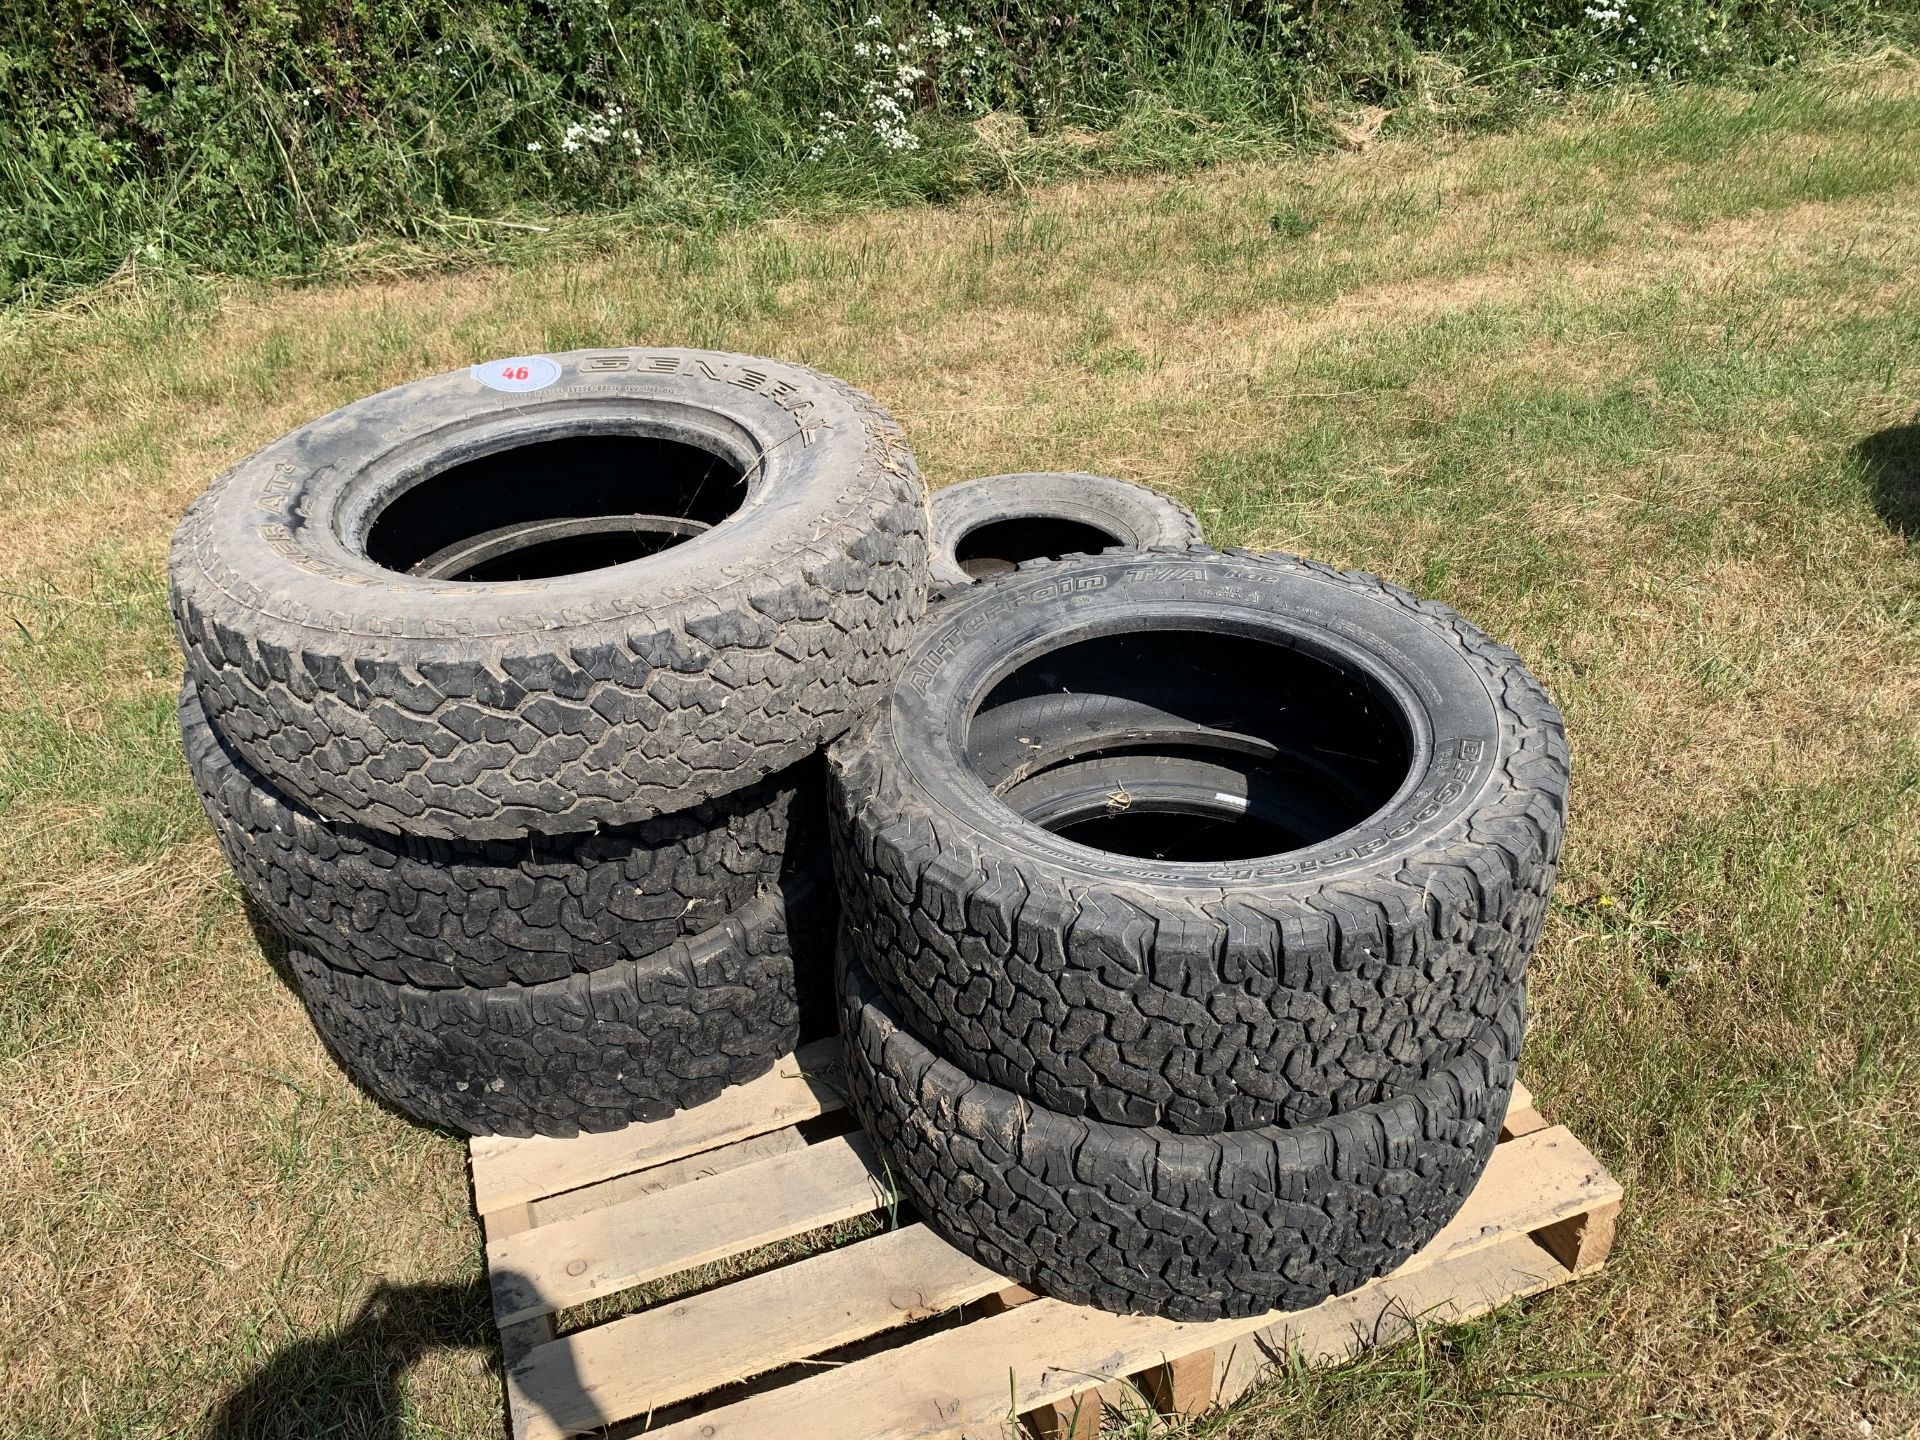 7 tyres